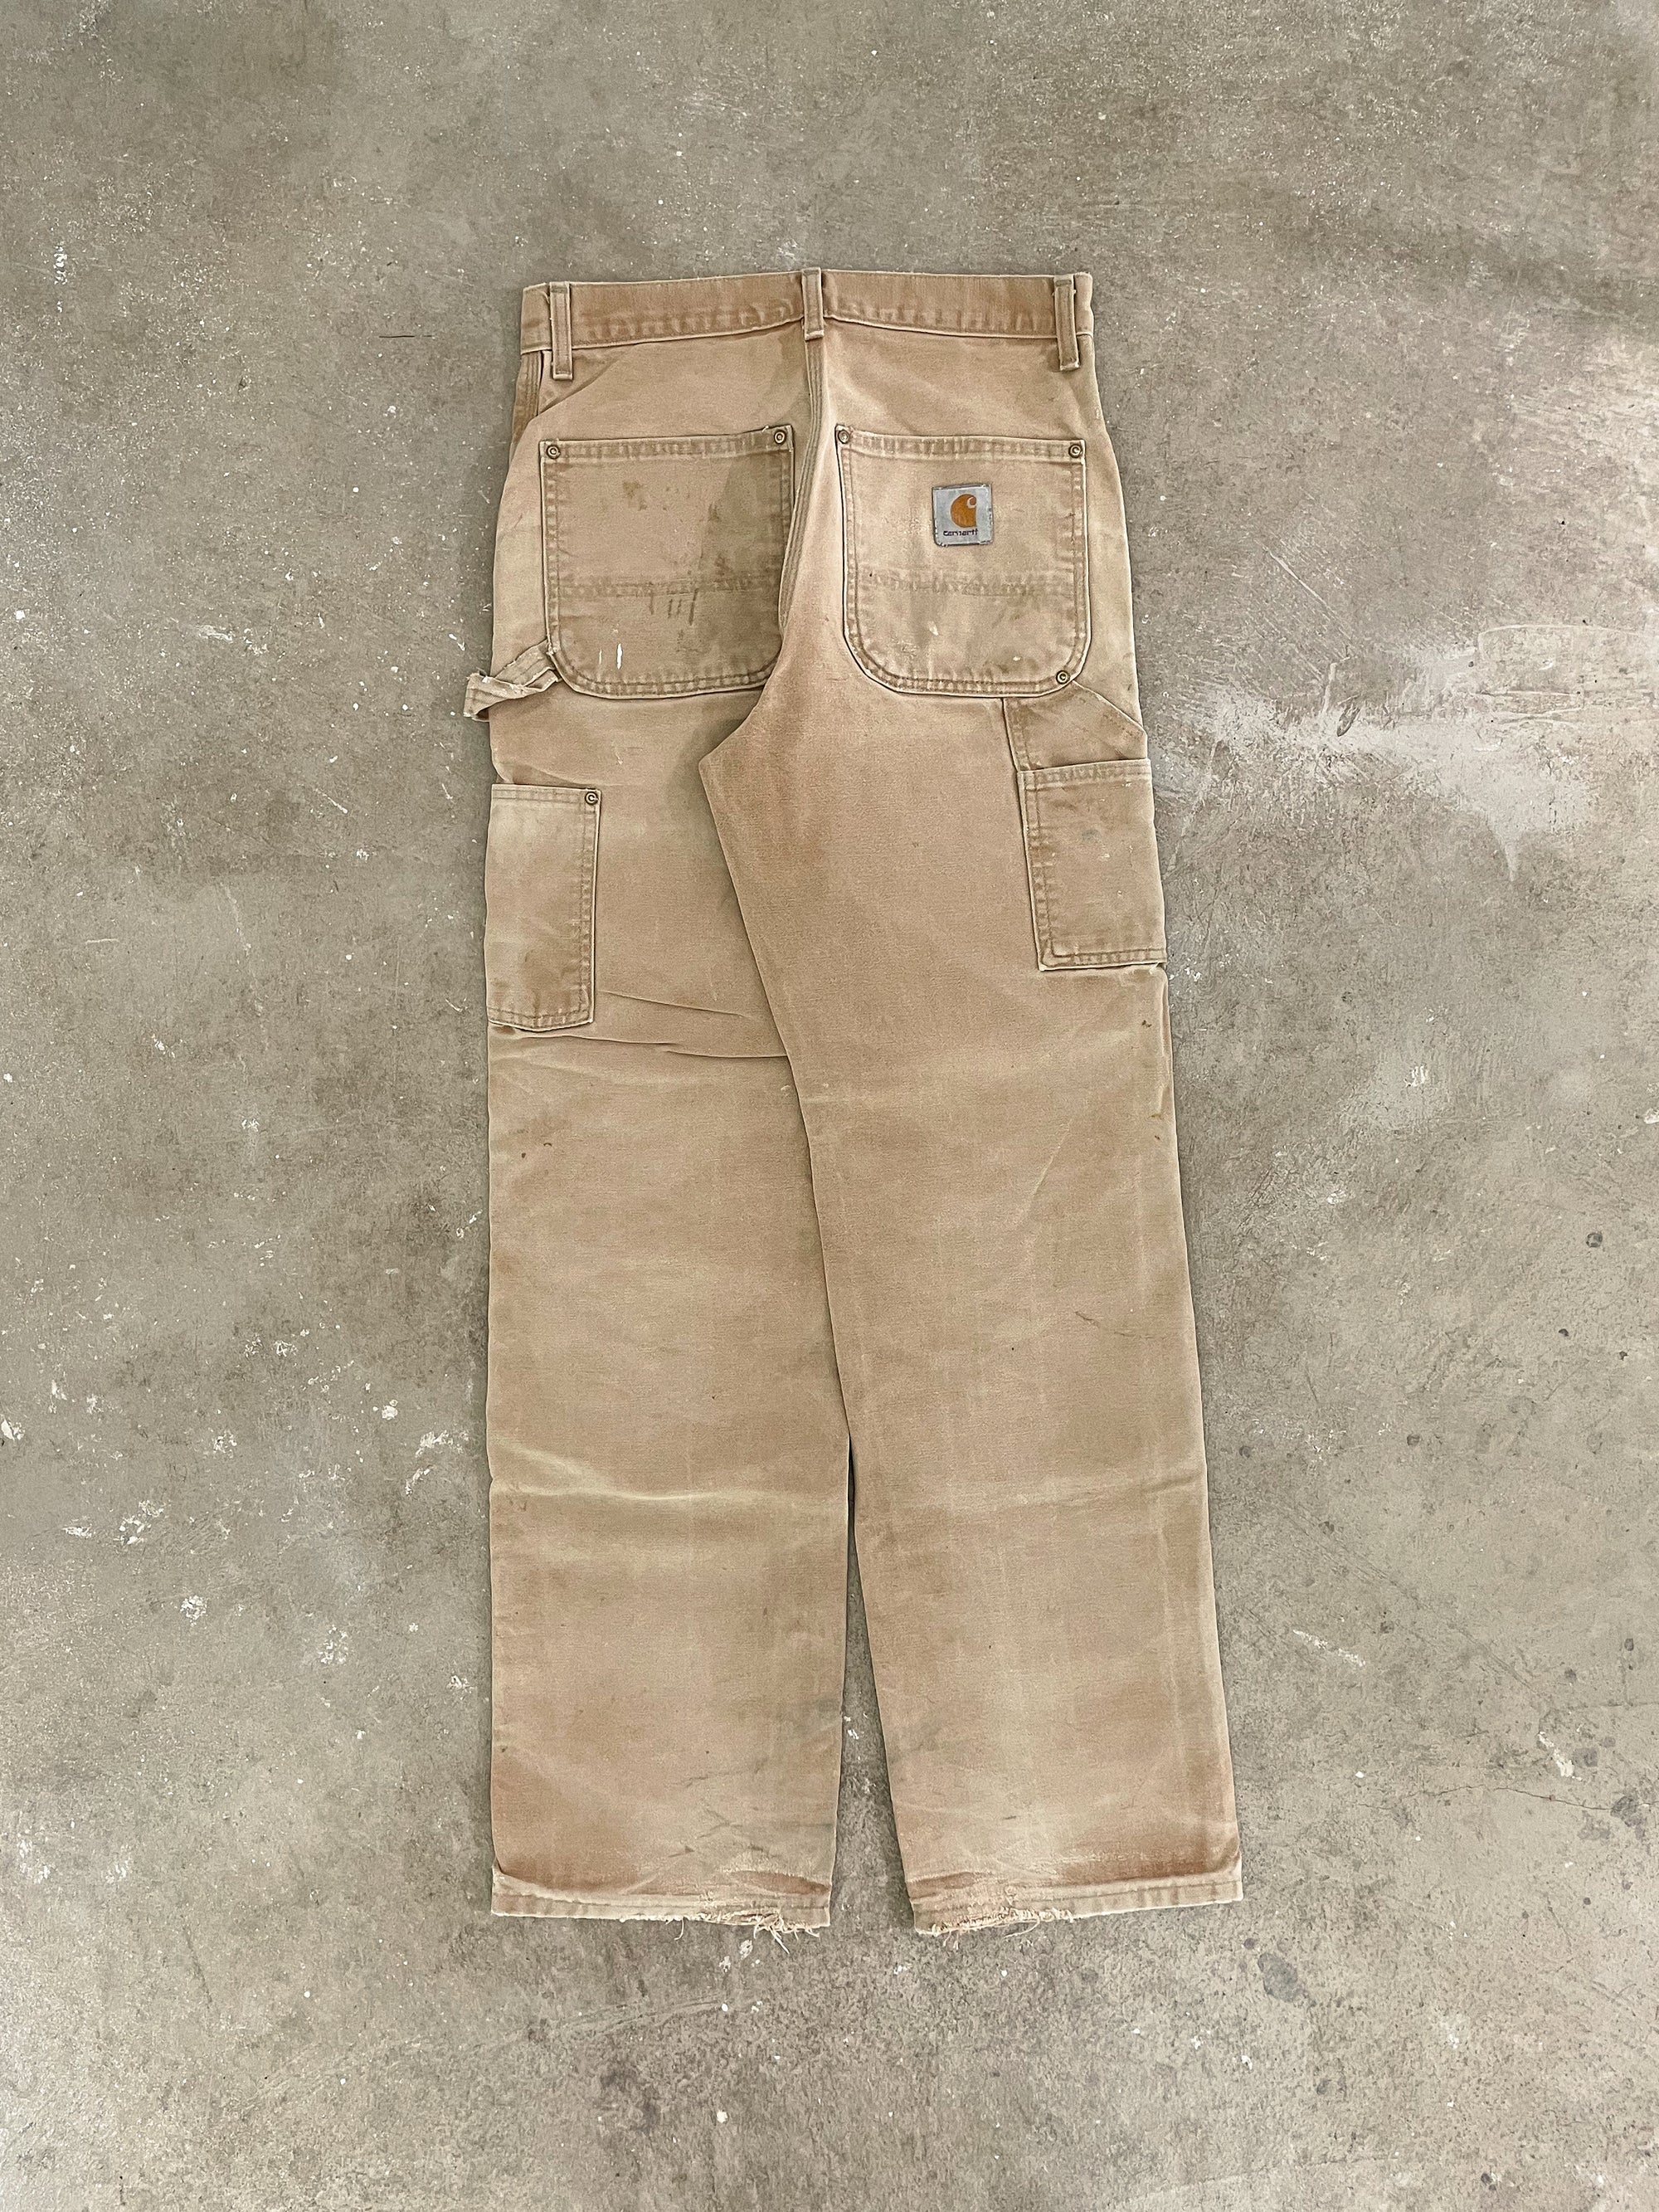 1990s/00s Carhartt B01 Tan Double Knee Work Pants (30X32)